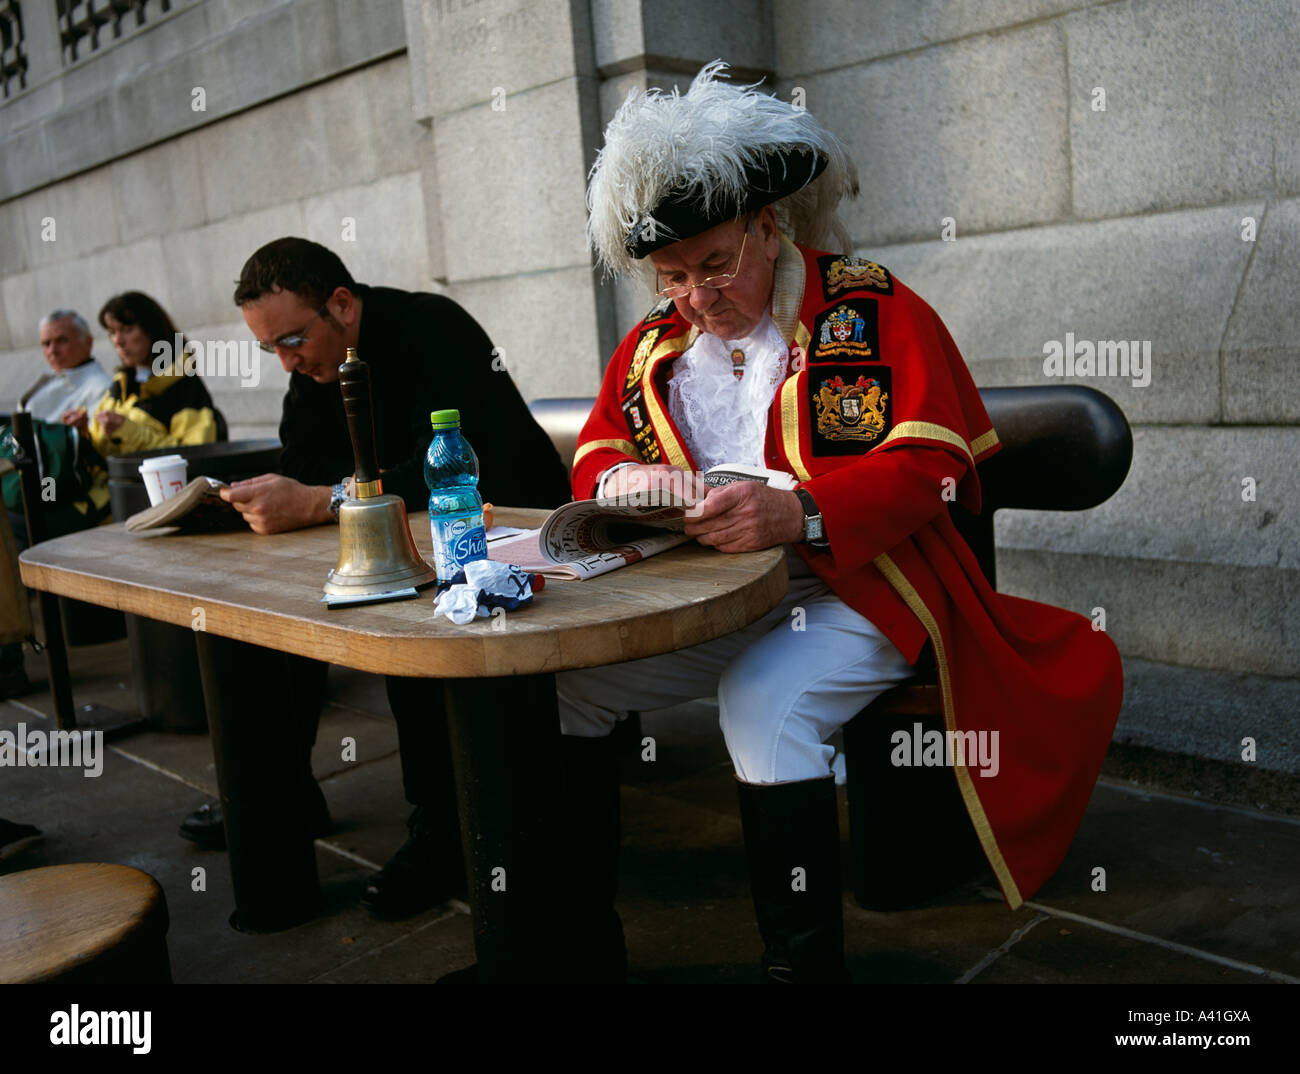 Town Crier Having His Lunch Trafalgar Square London U.K. Europe Stock Photo